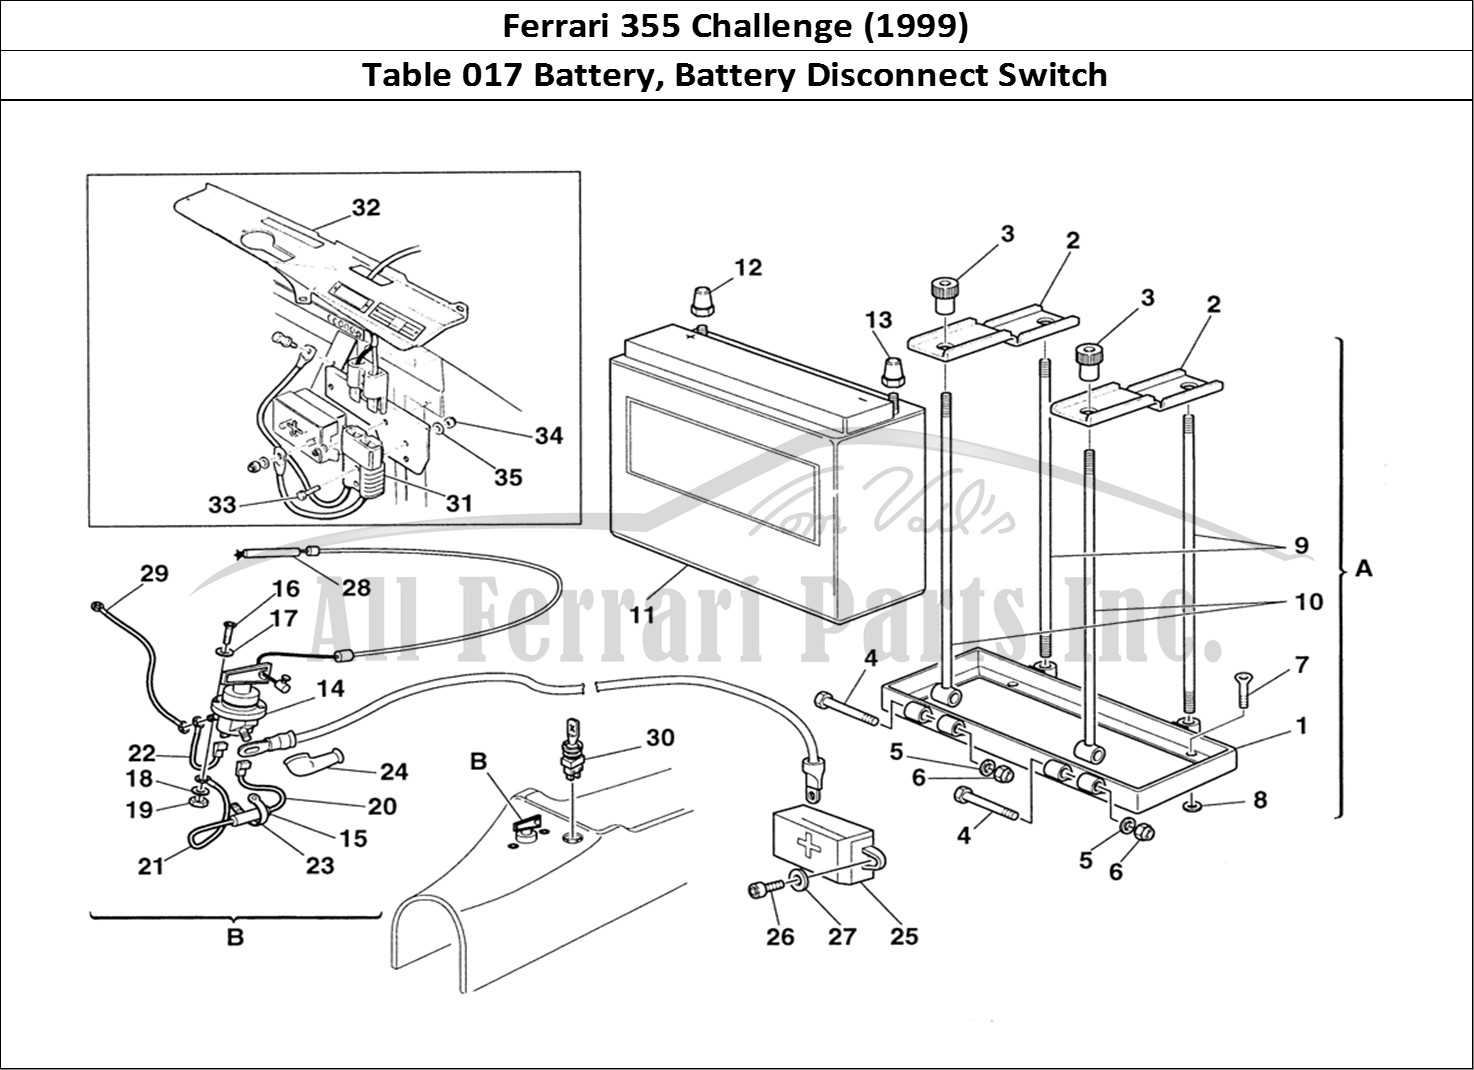 Ferrari Parts Ferrari 355 Challenge (1999) Page 017 Battery and Battery Disco